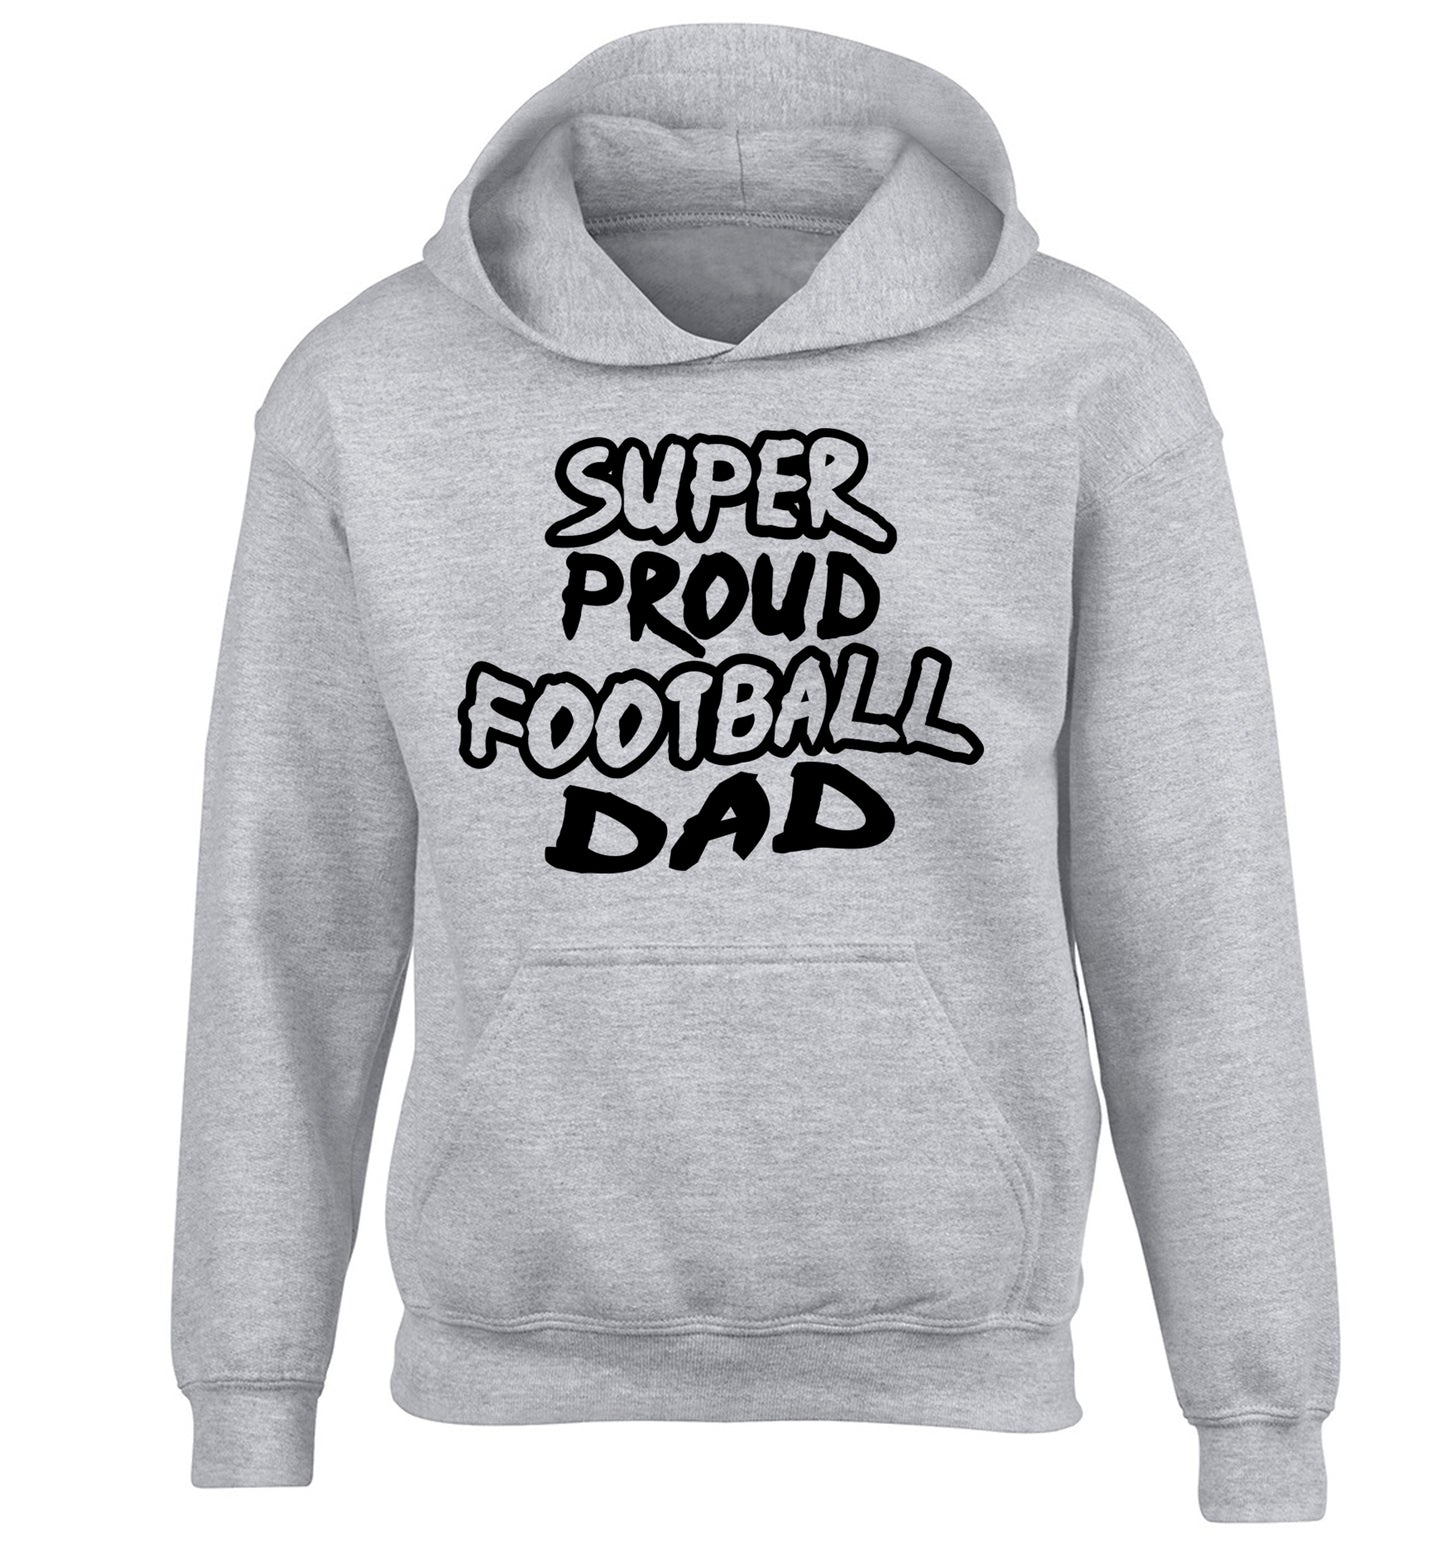 Super proud football dad children's grey hoodie 12-14 Years